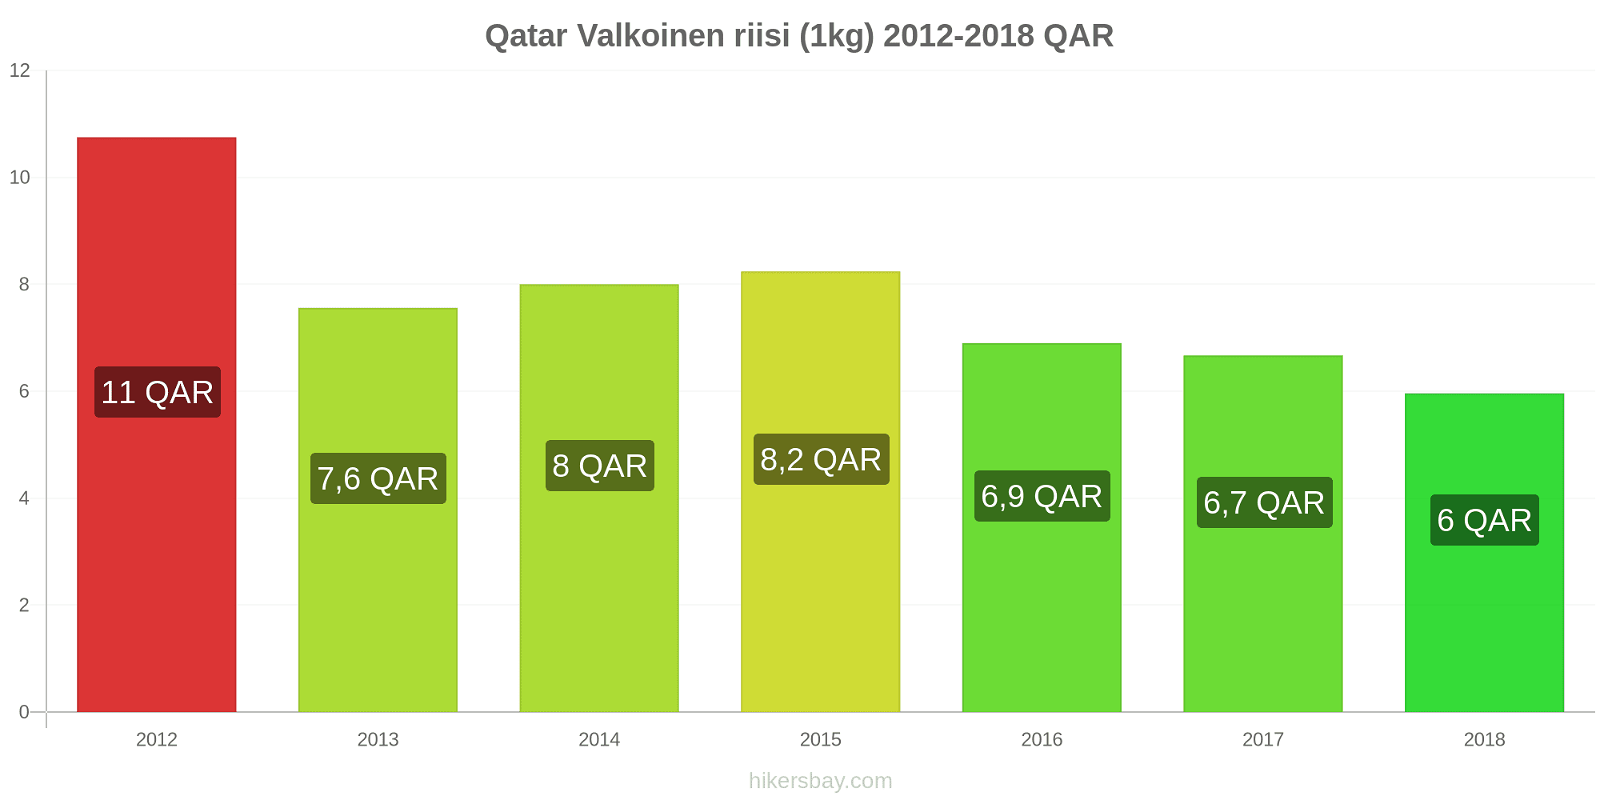 Qatar hintojen muutokset Valkoinen riisi (1kg) hikersbay.com